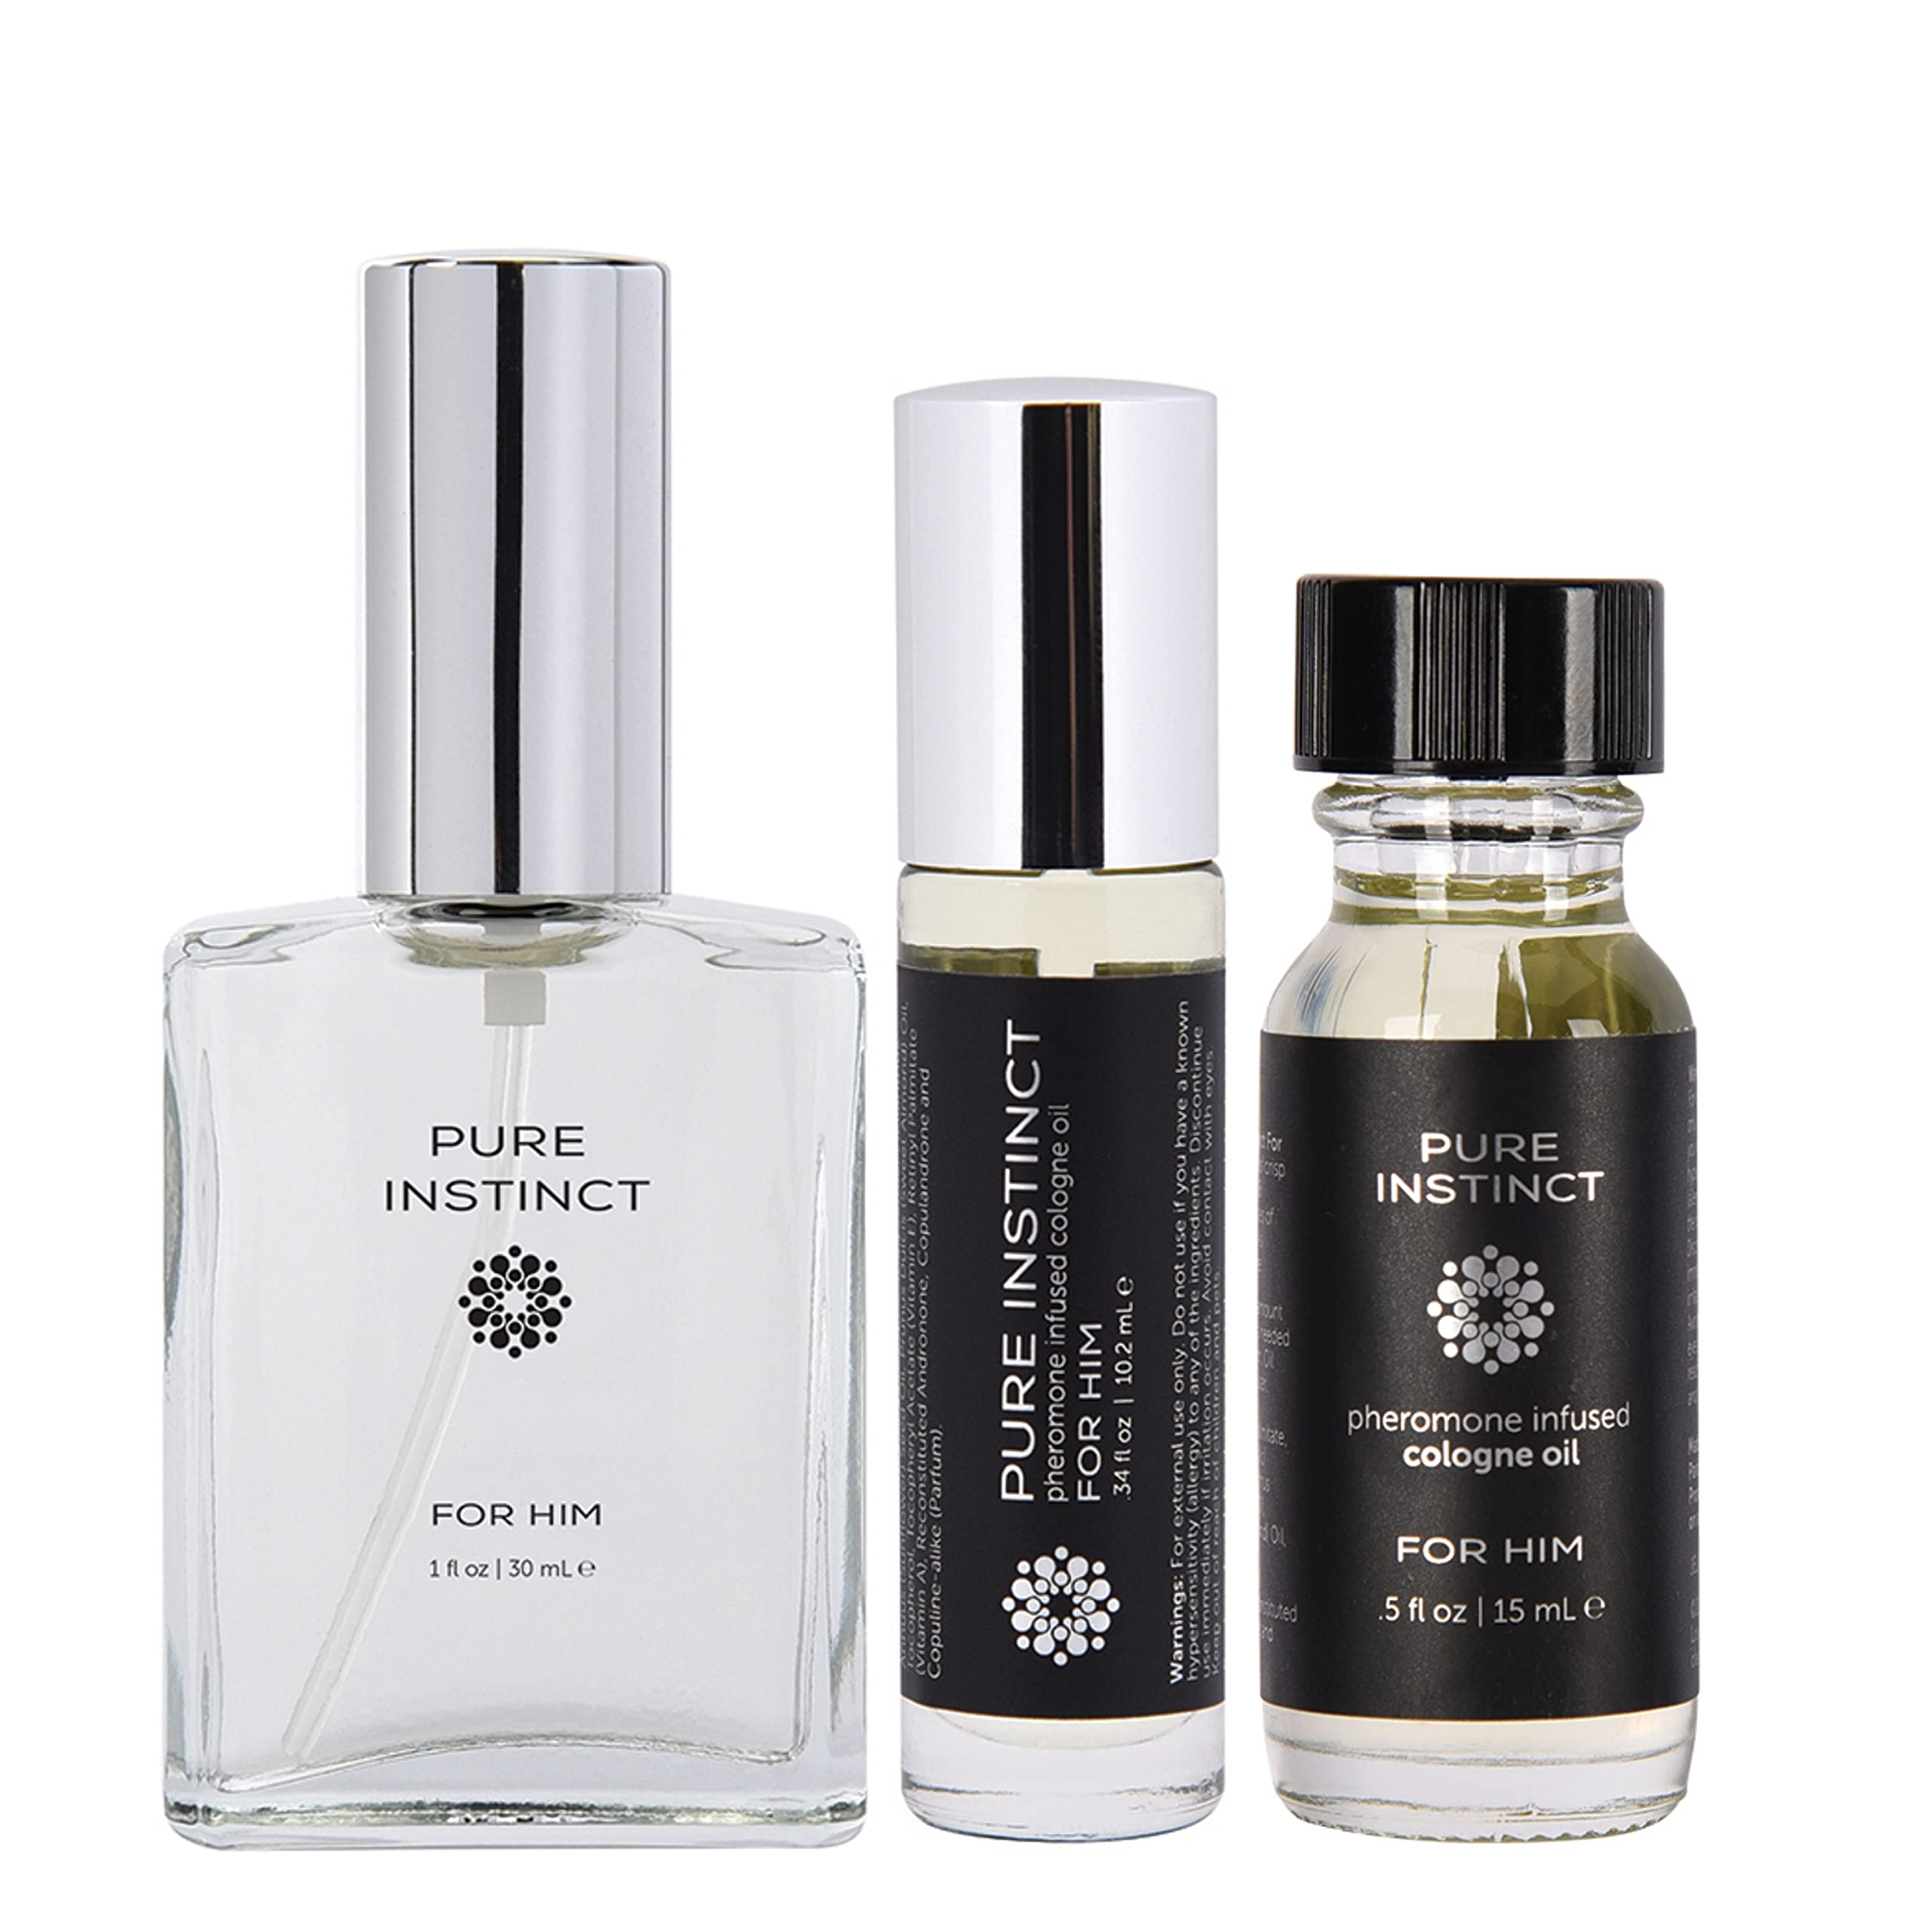 Pure Instinct Pheromone Perfume Cologne Oil Set For Him - Set of 3